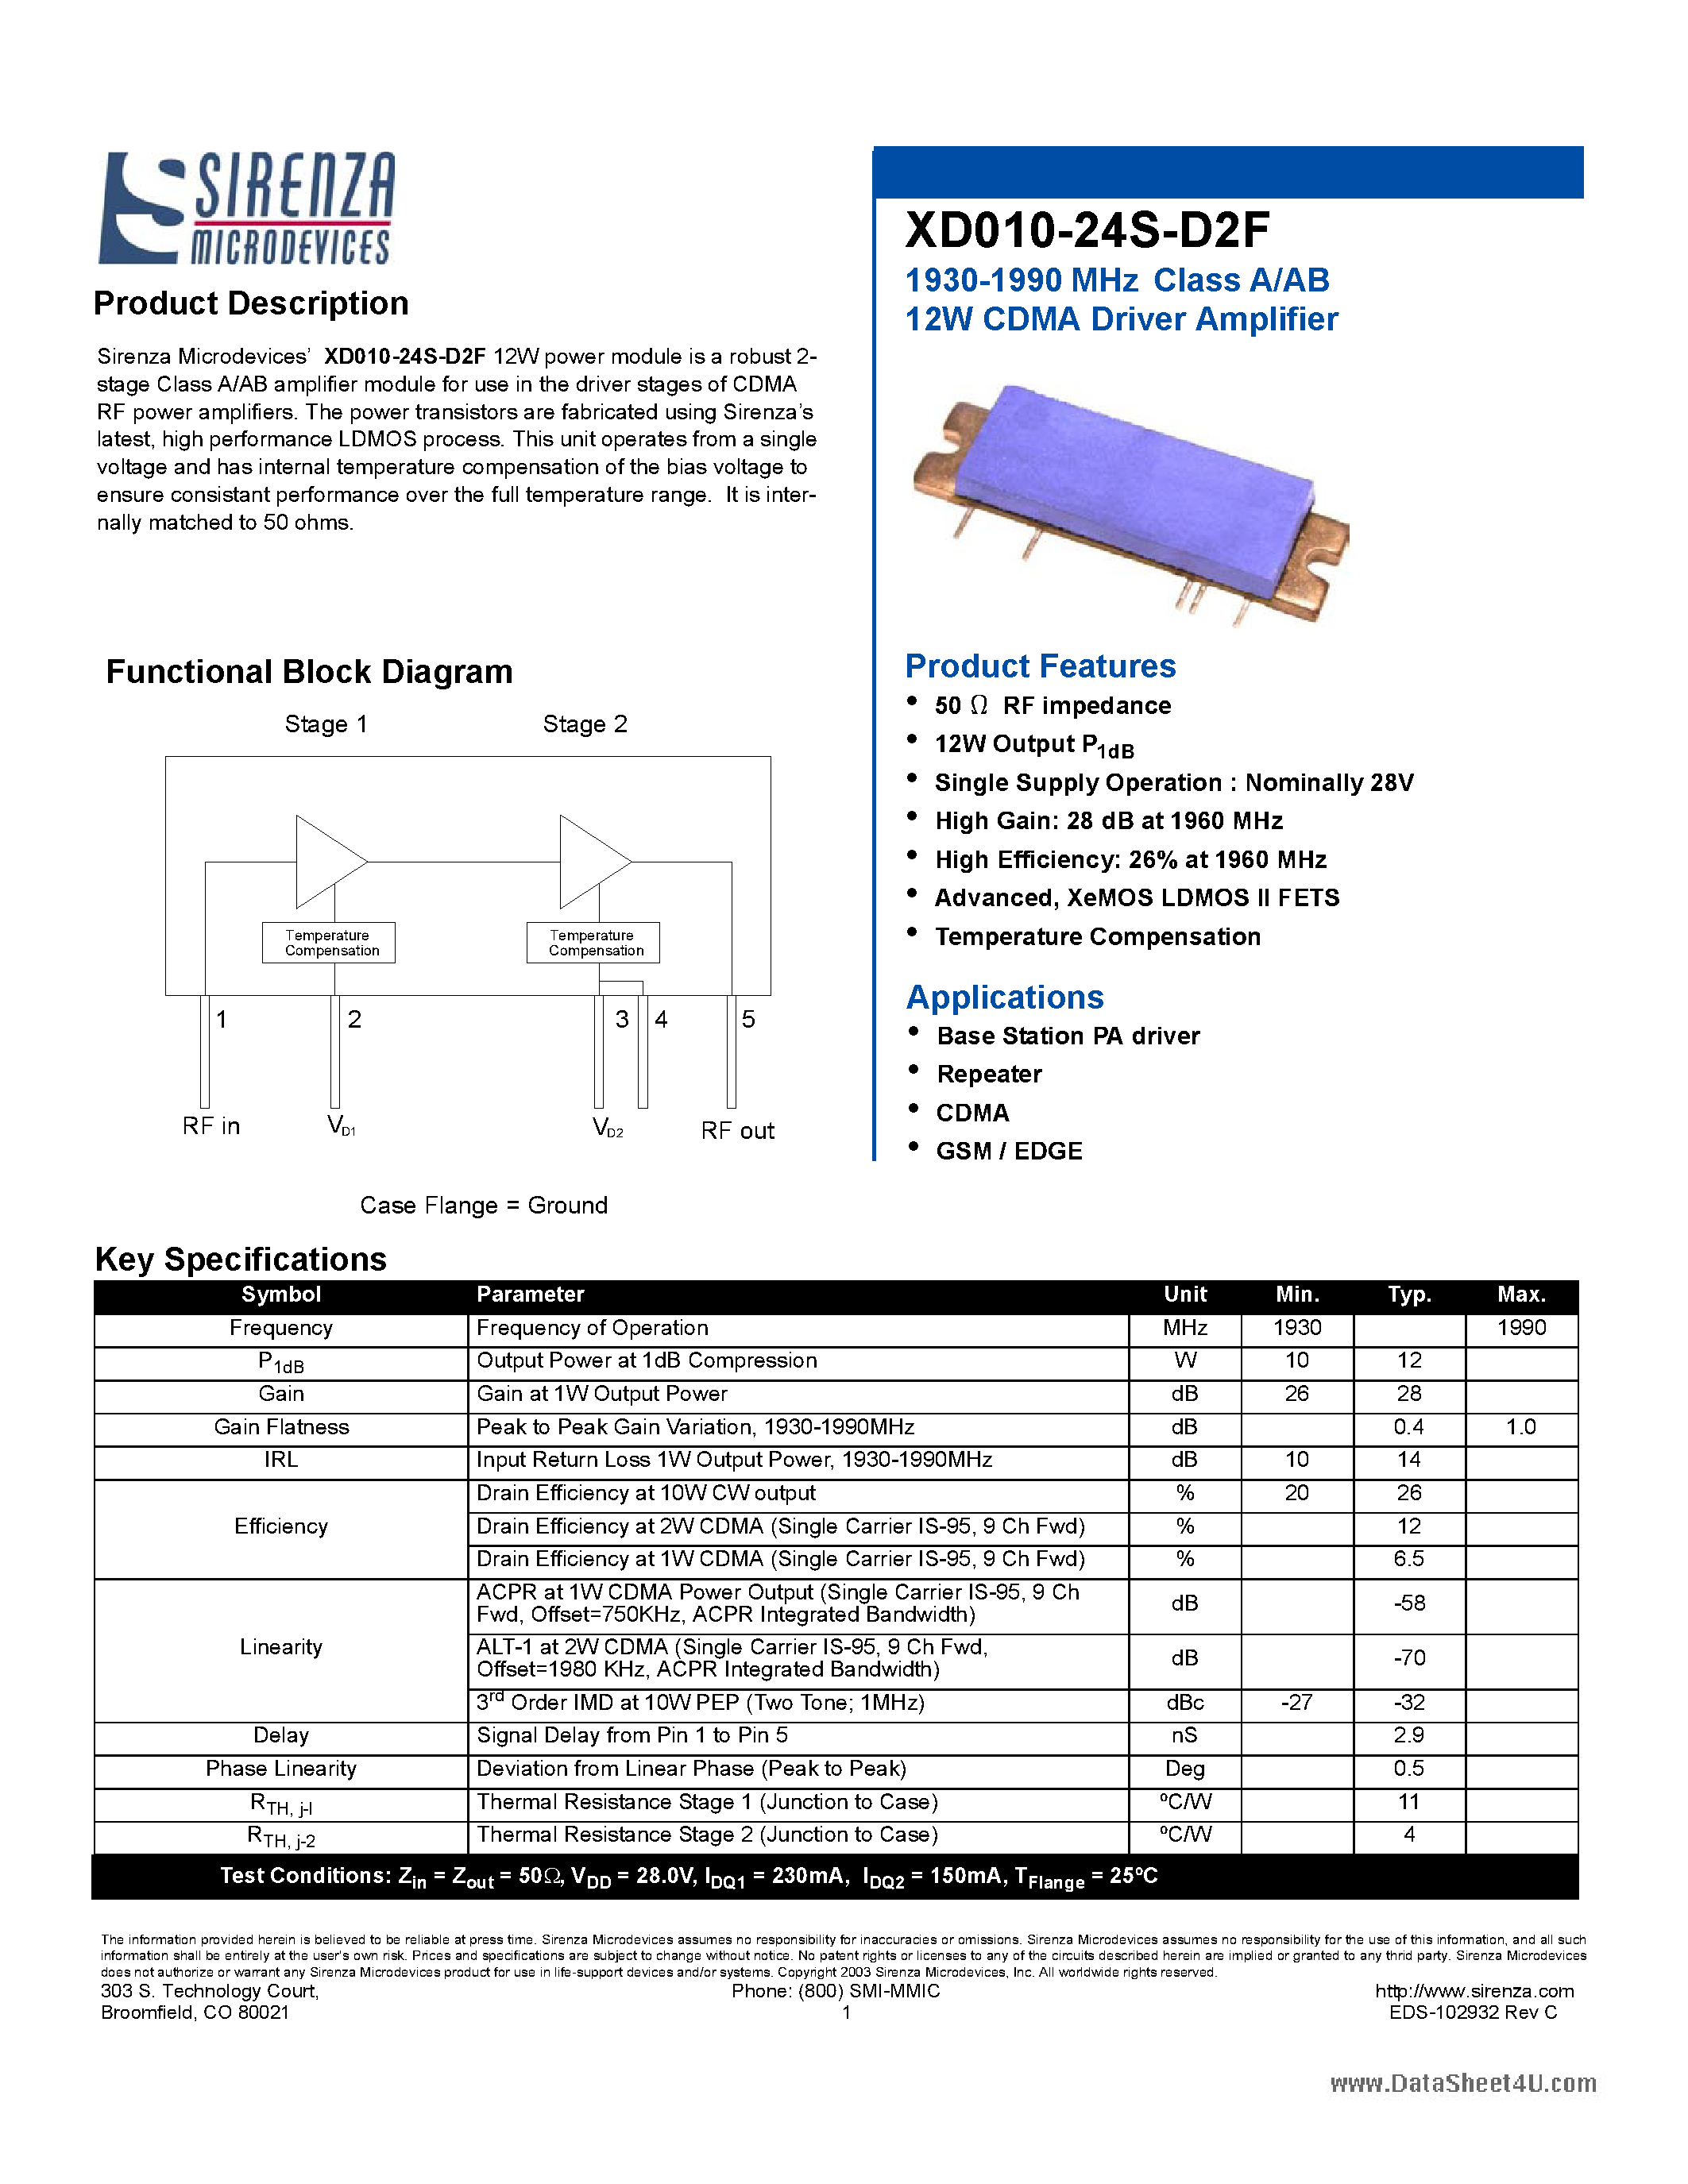 Даташит XD010-24S-D2F - Class A/AB 12W CDMA Driver Amplifier страница 1